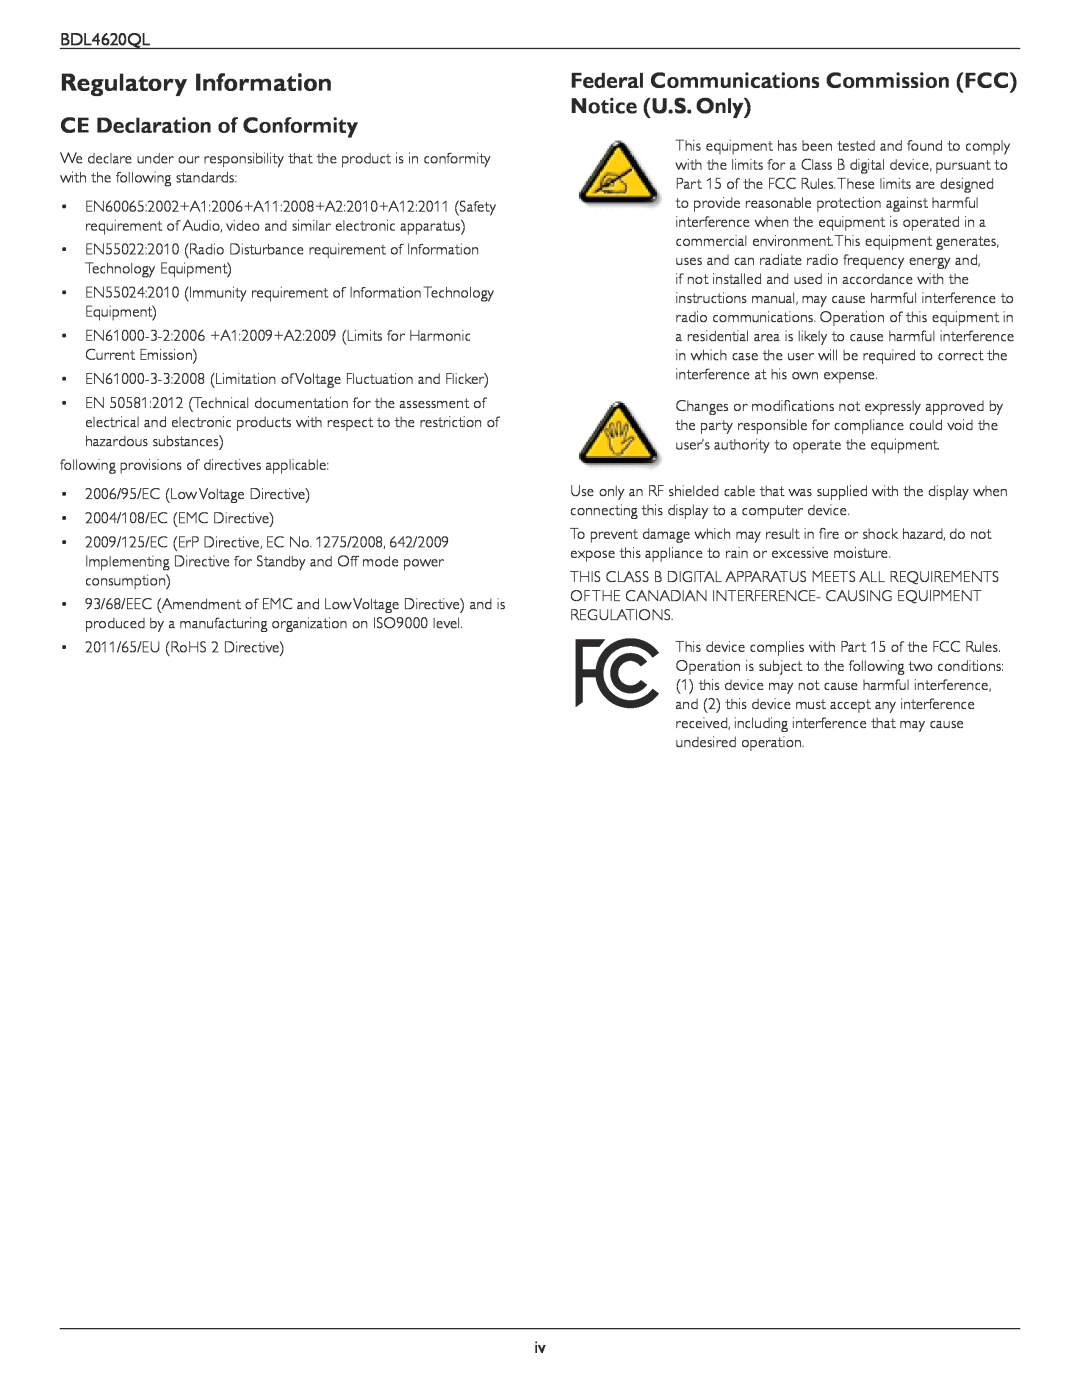 Philips BDL4620QL user manual Regulatory Information, CE Declaration of Conformity 